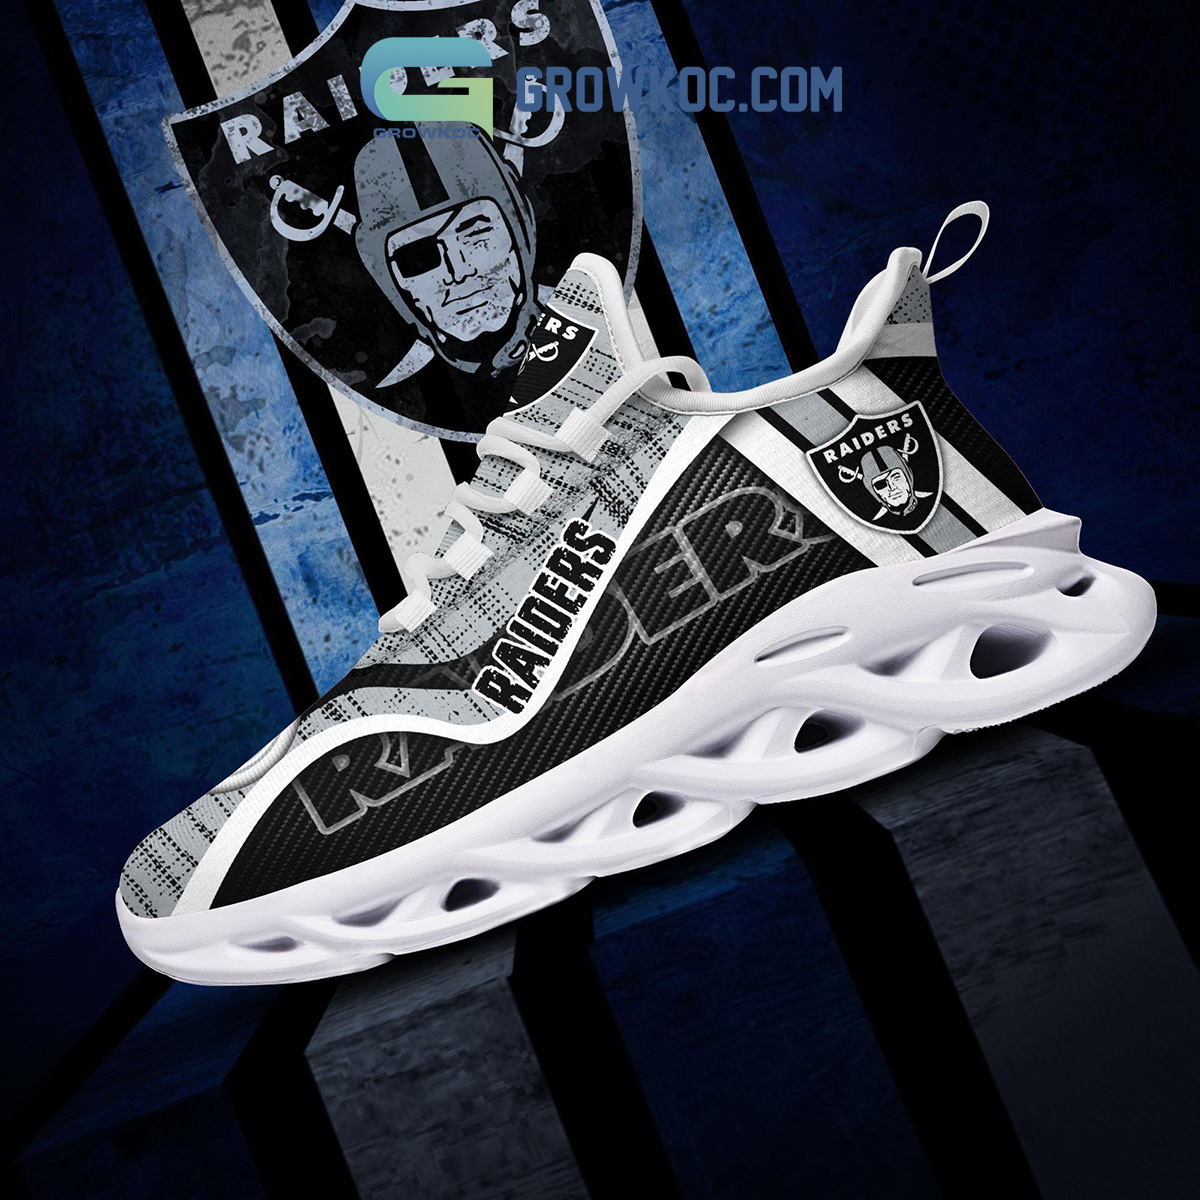 Las Vegas Raiders NFL Personalized Air Jordan 13 Sport Shoes - Growkoc